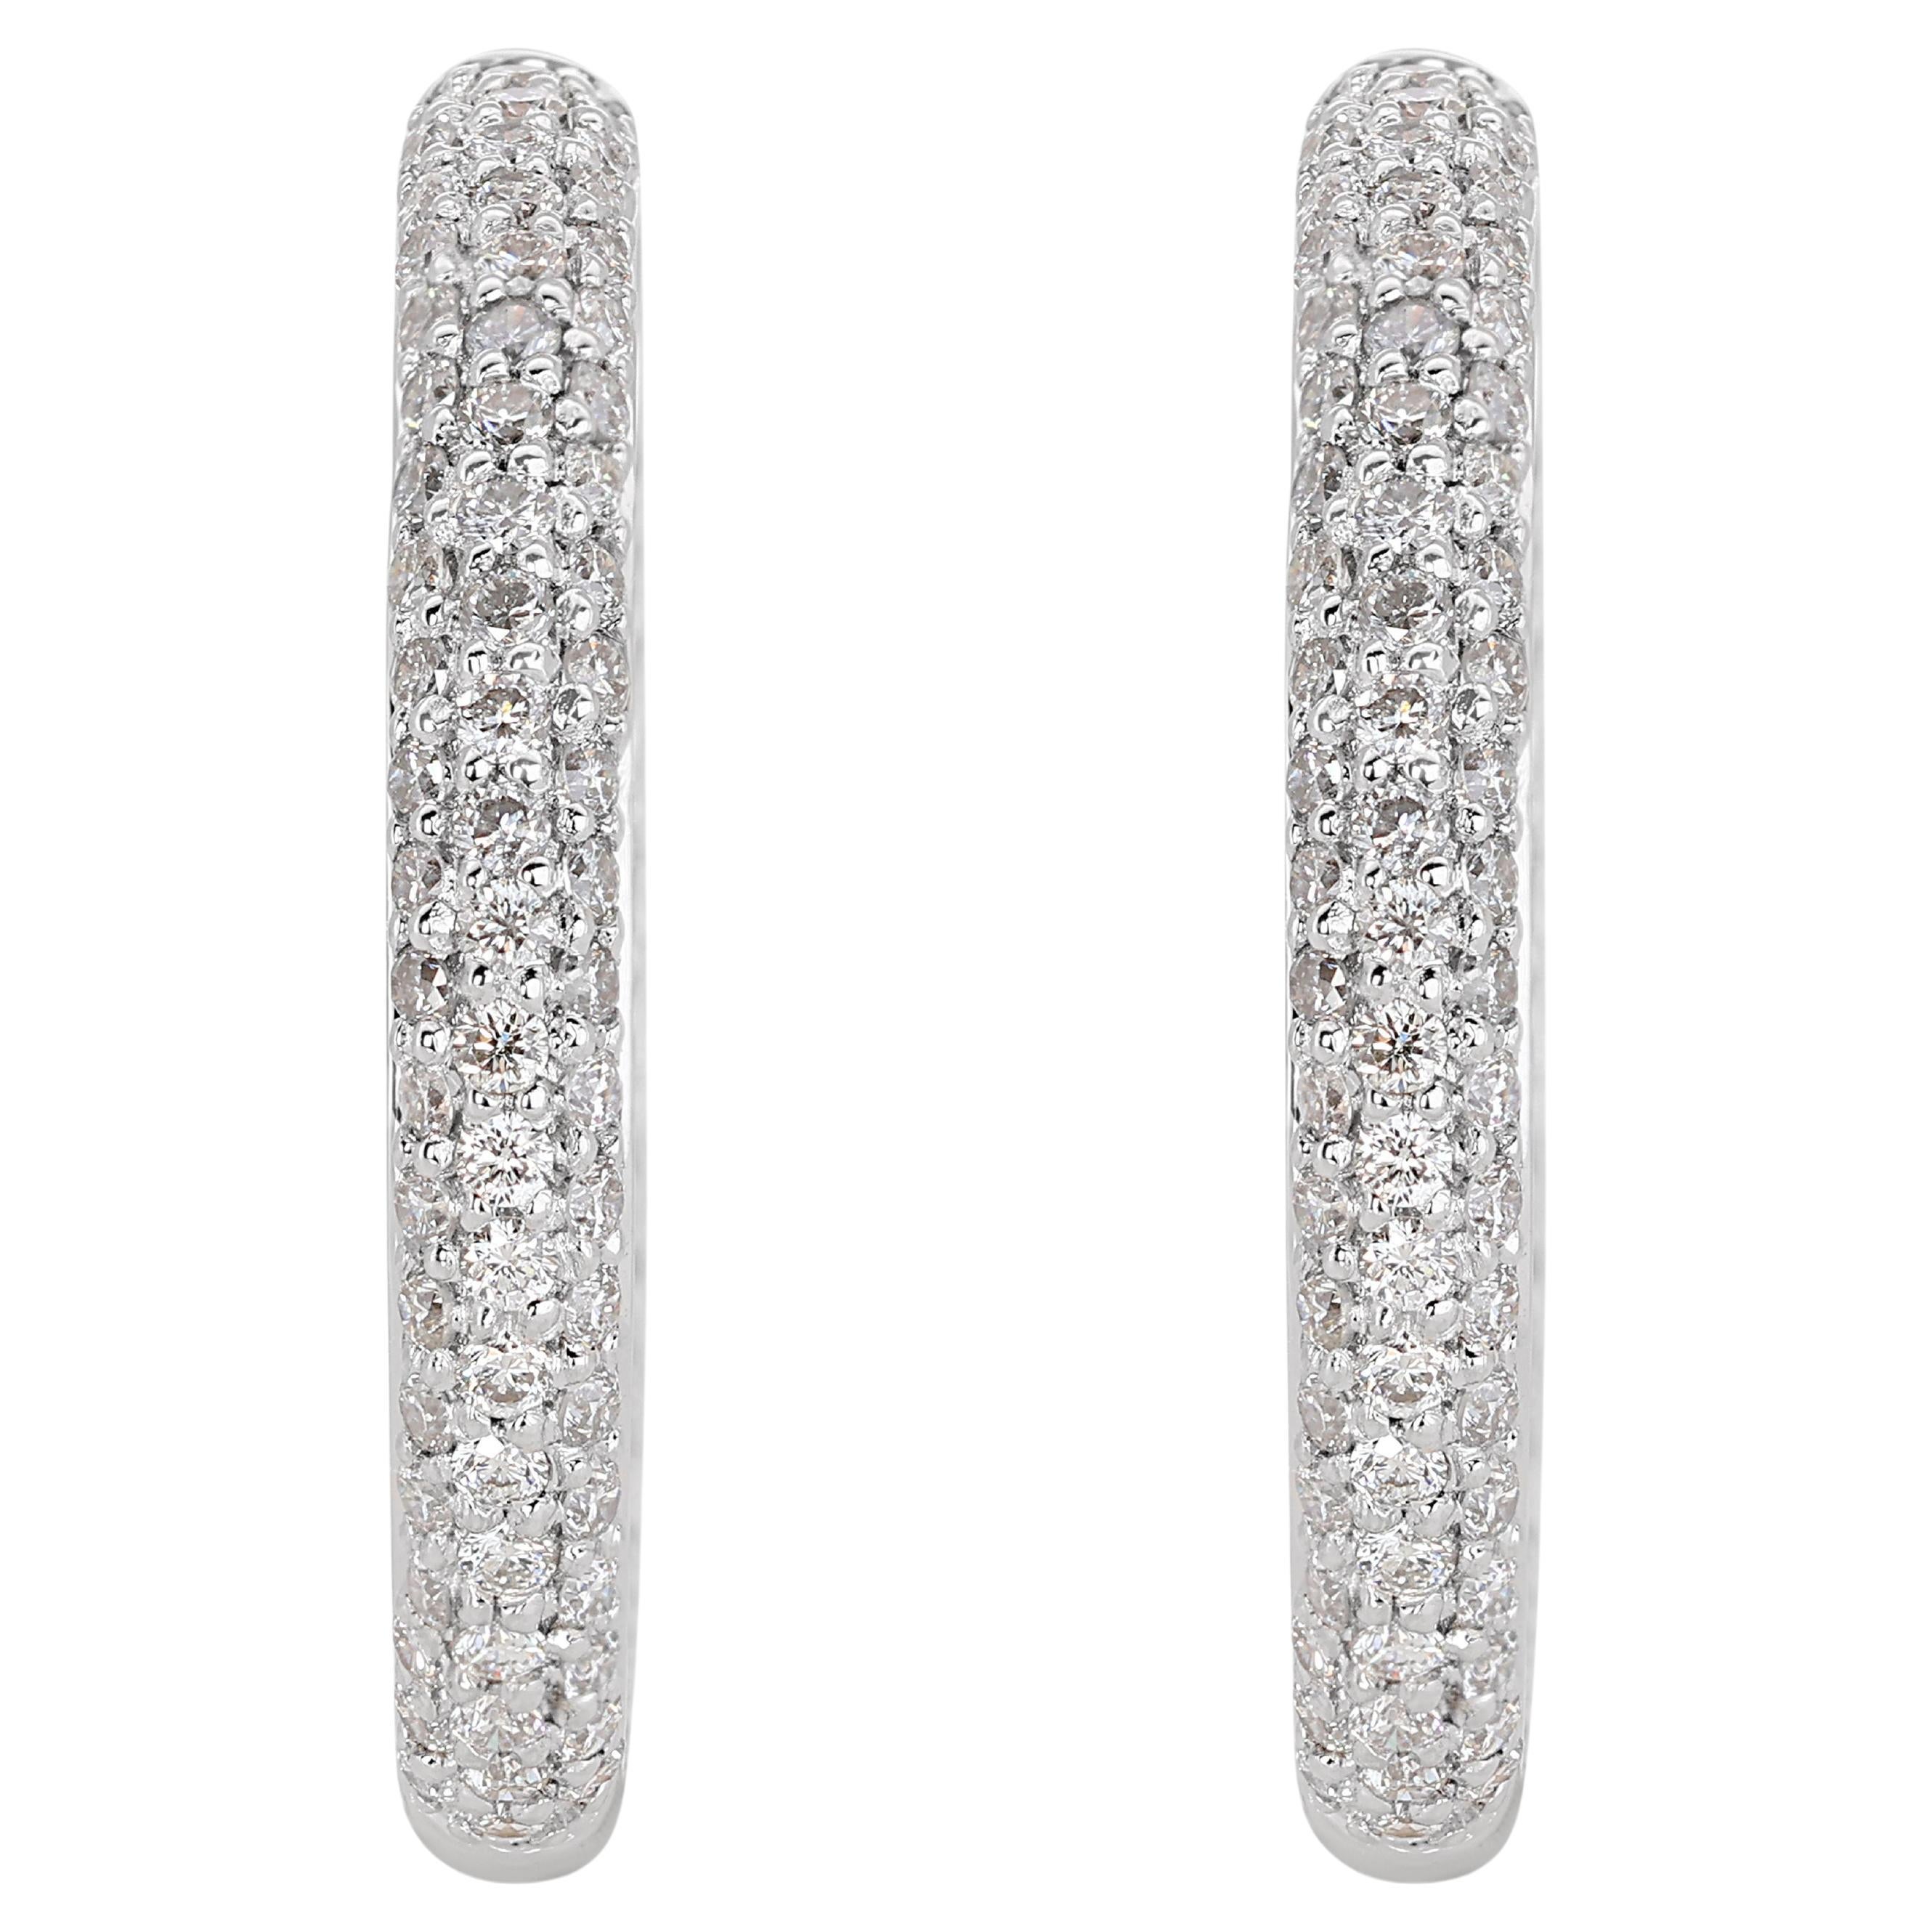 Exquisite 1.15ct Hoop Diamond Earrings set in 18K White Gold